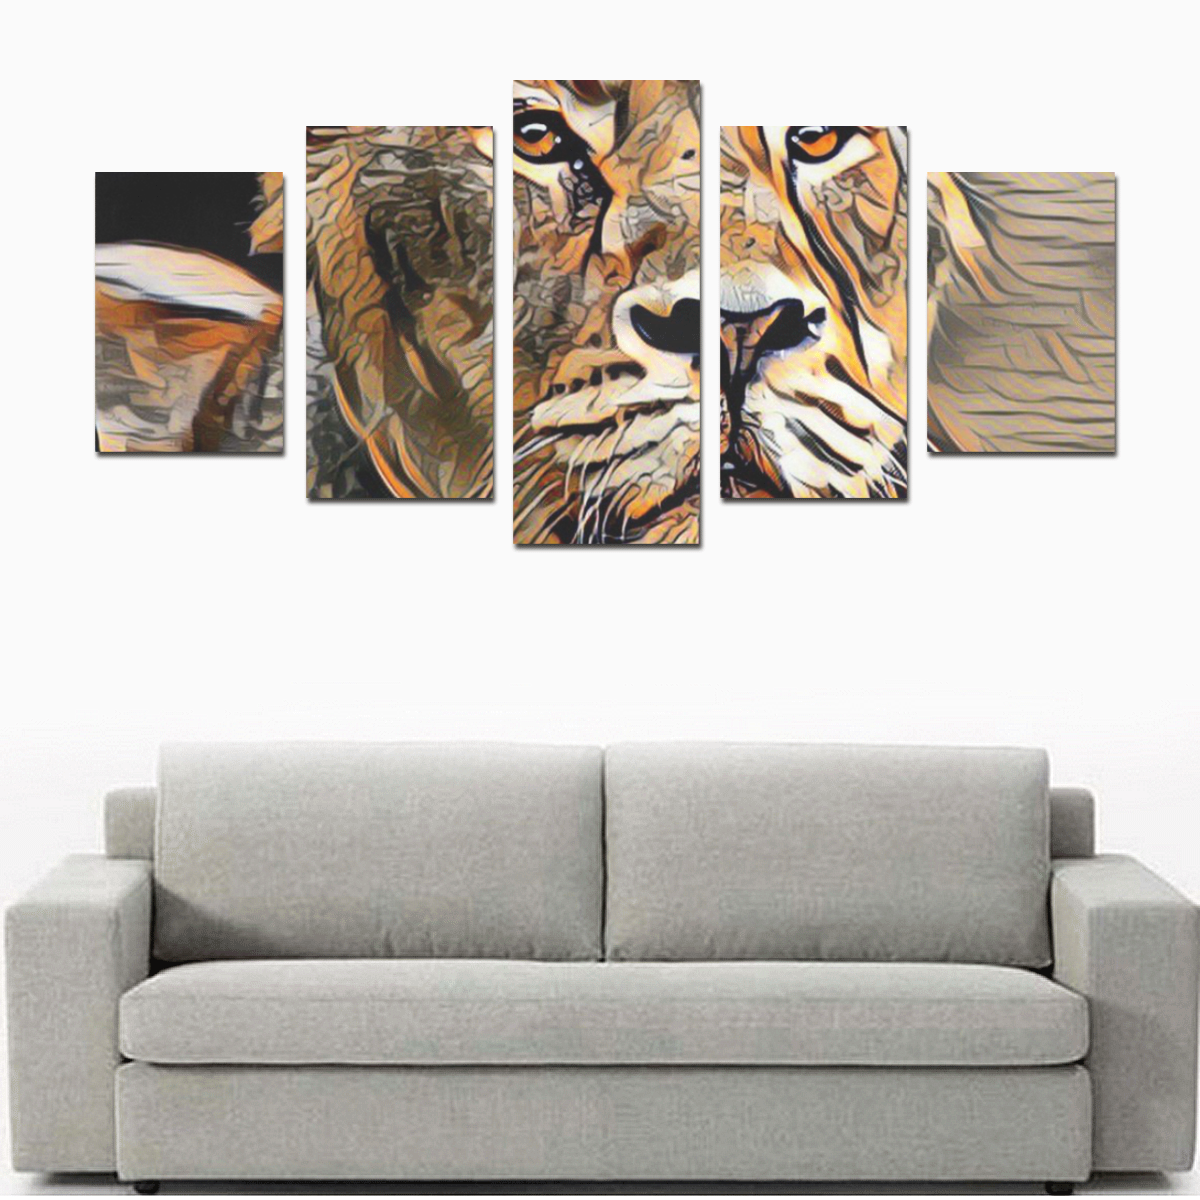 ArtAnimal Lioness by JamColors Canvas Print Sets D (No Frame)